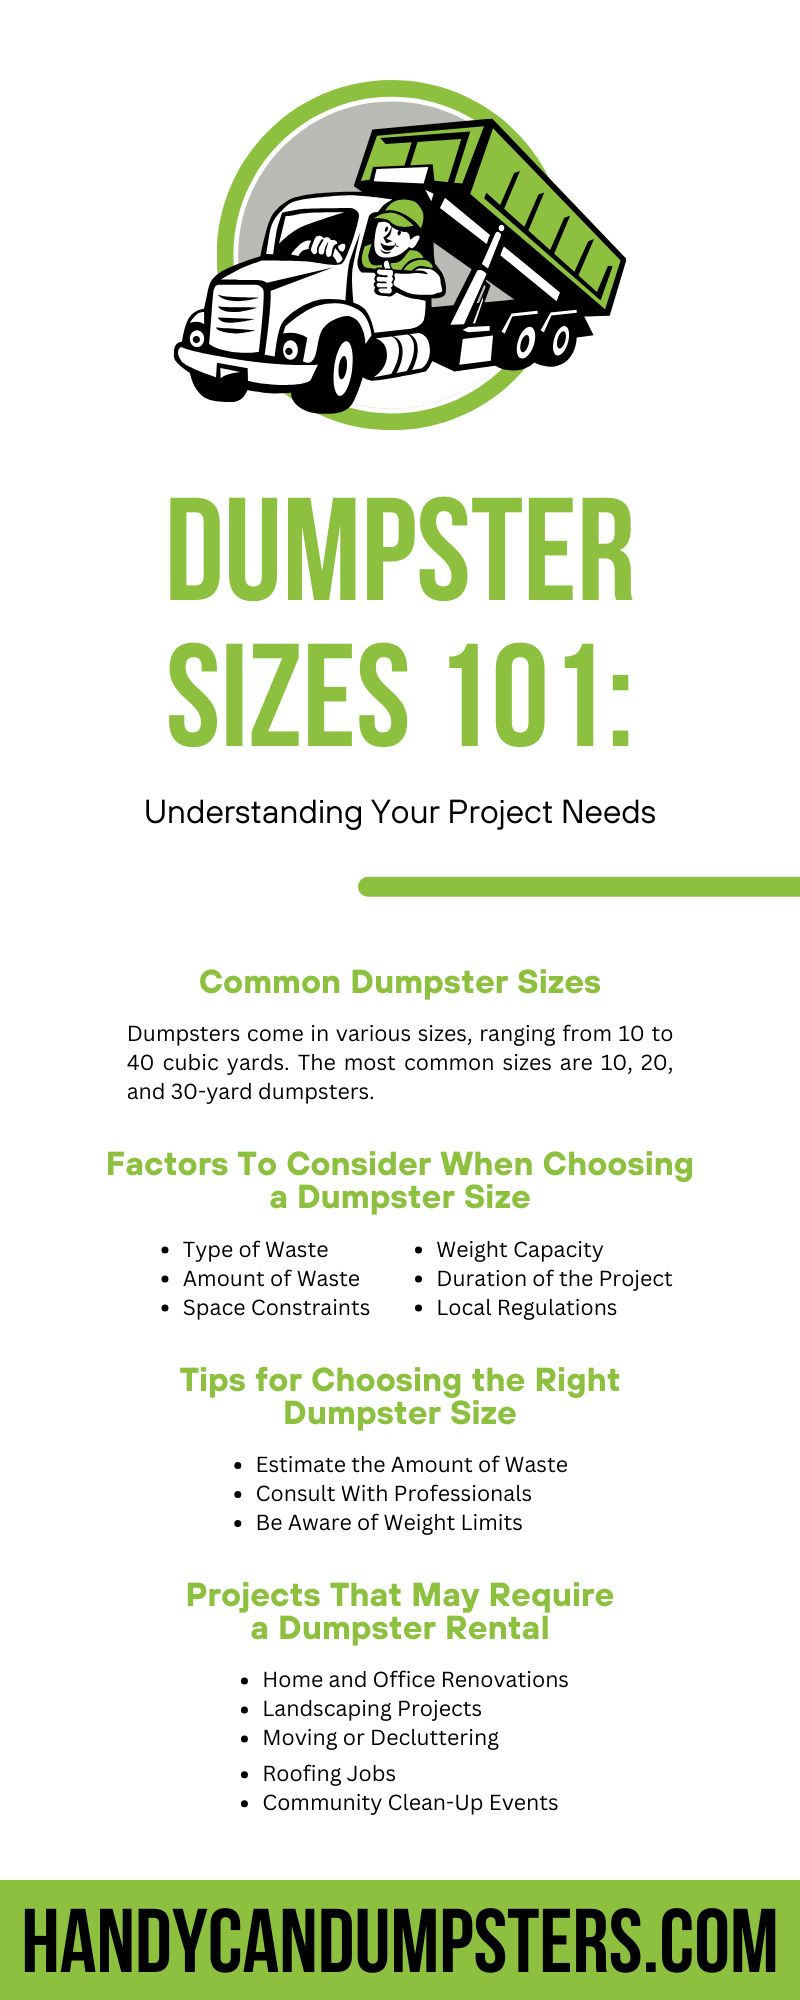 Dumpster Sizes 101: Understanding Your Project Needs